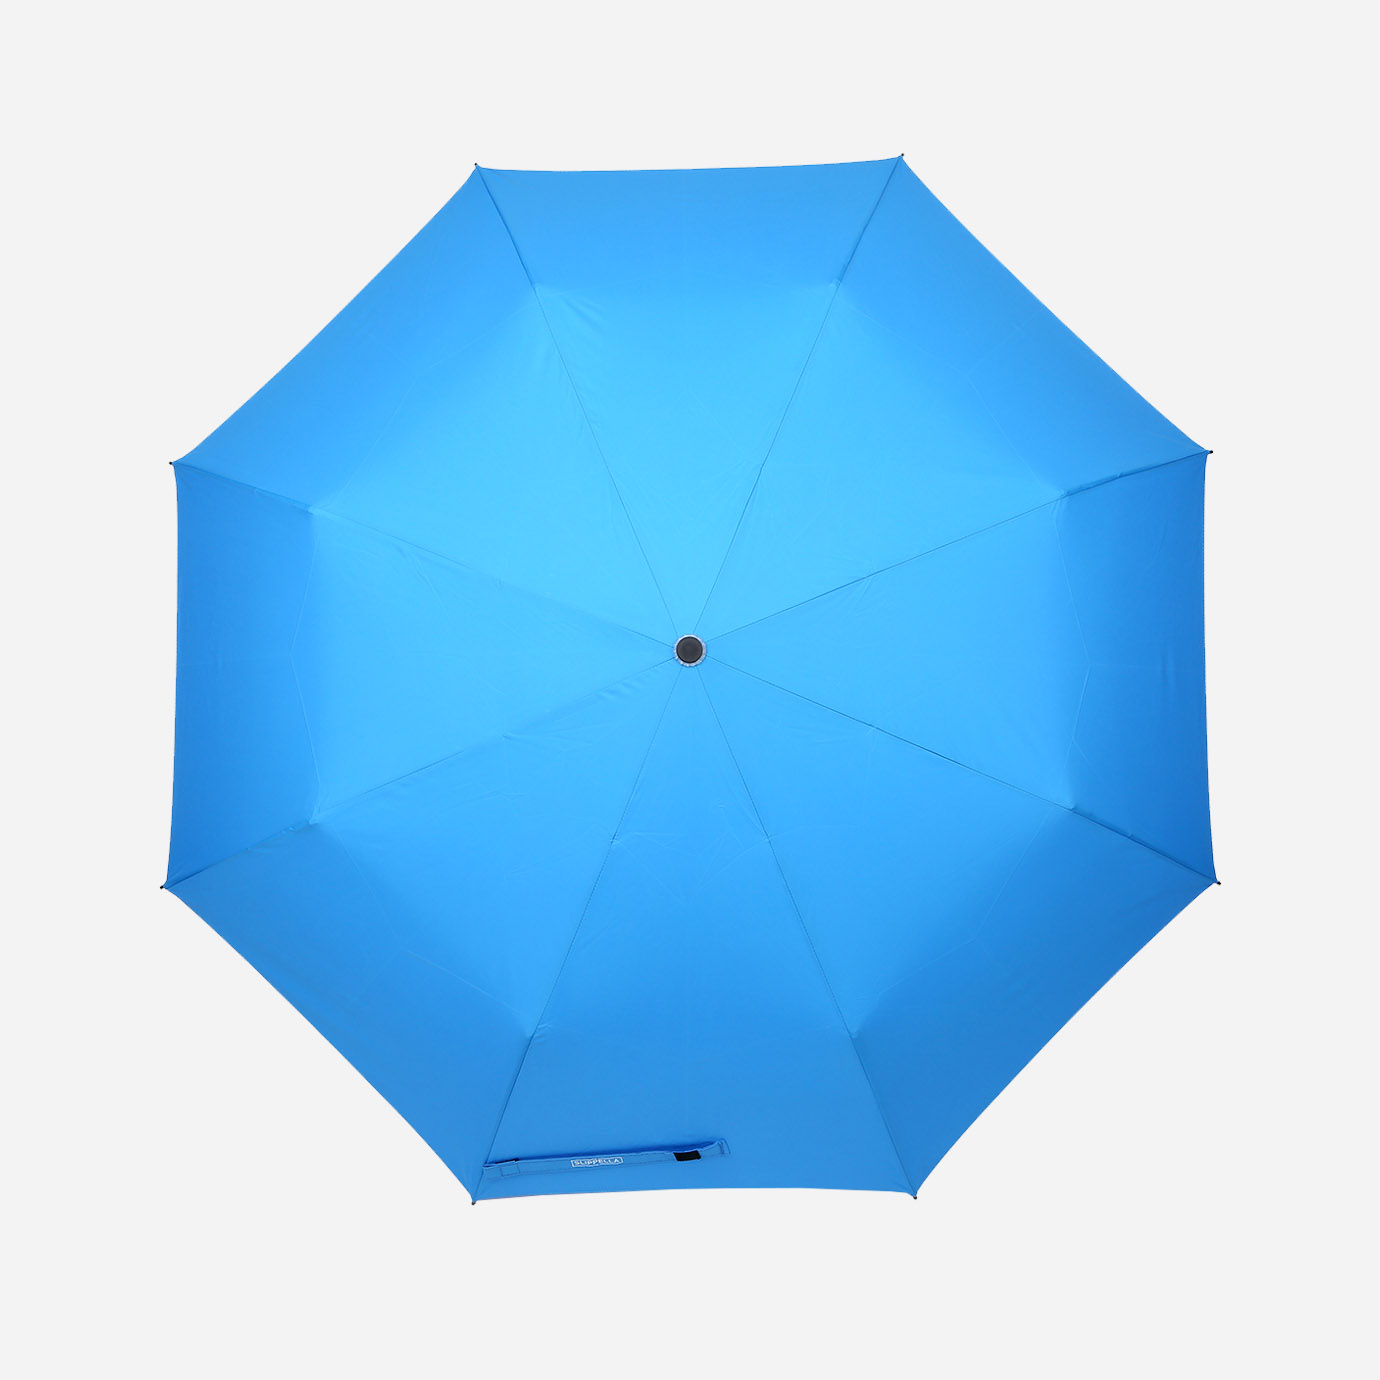 Slippella 雨傘 – 採用超防水技術 (Bundle Special)